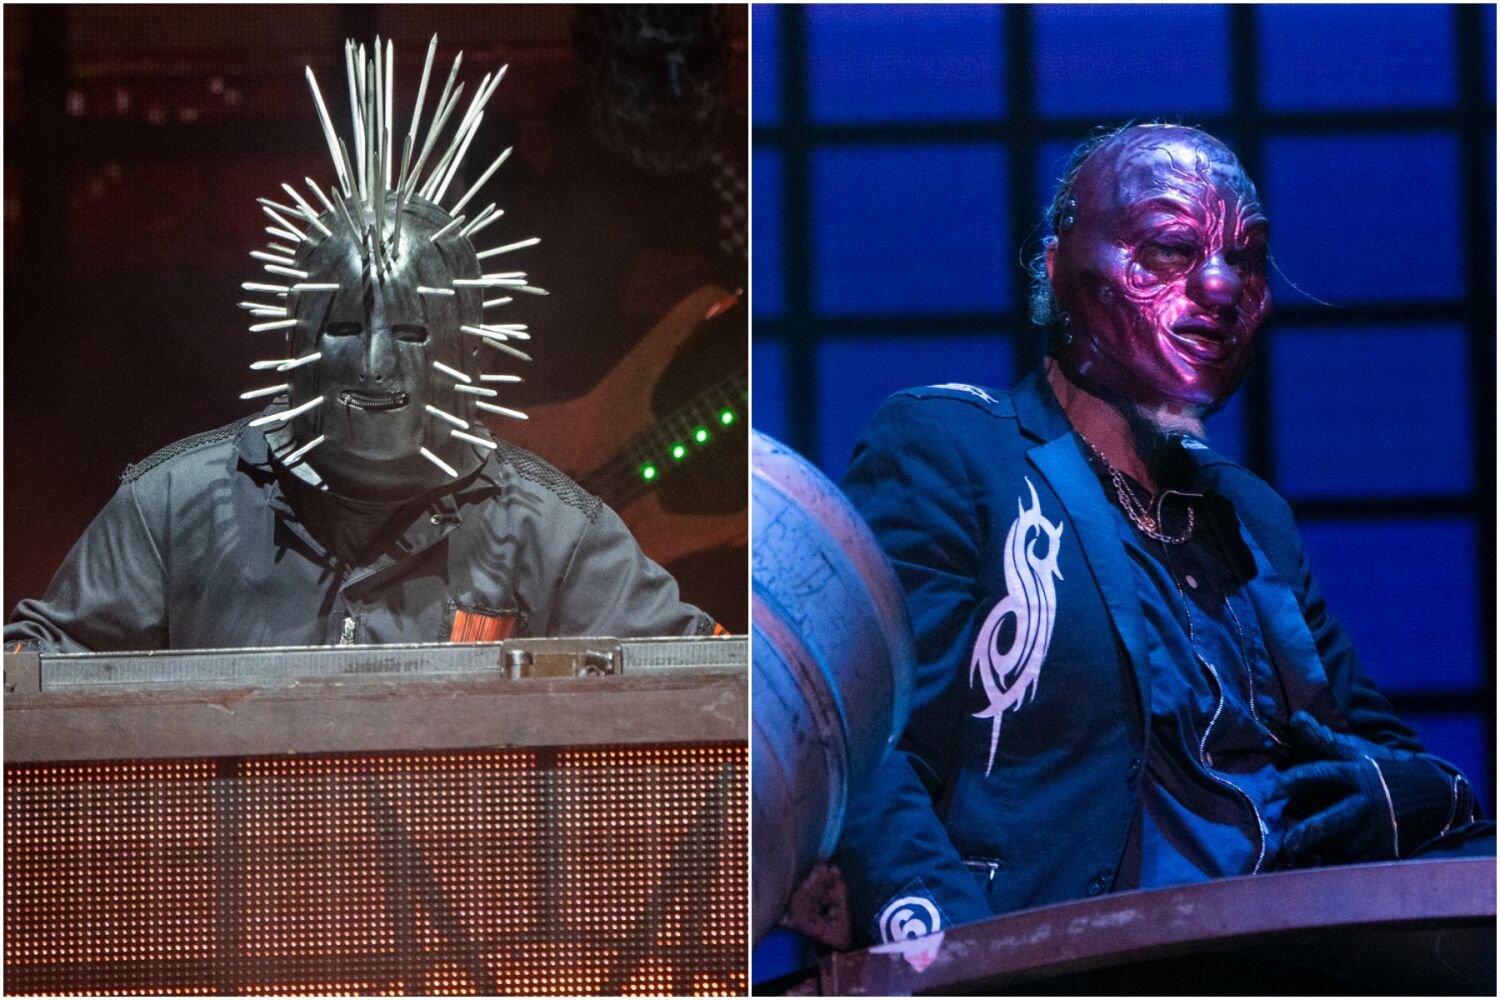 Slipknot loses two longtime members ahead of its European tour